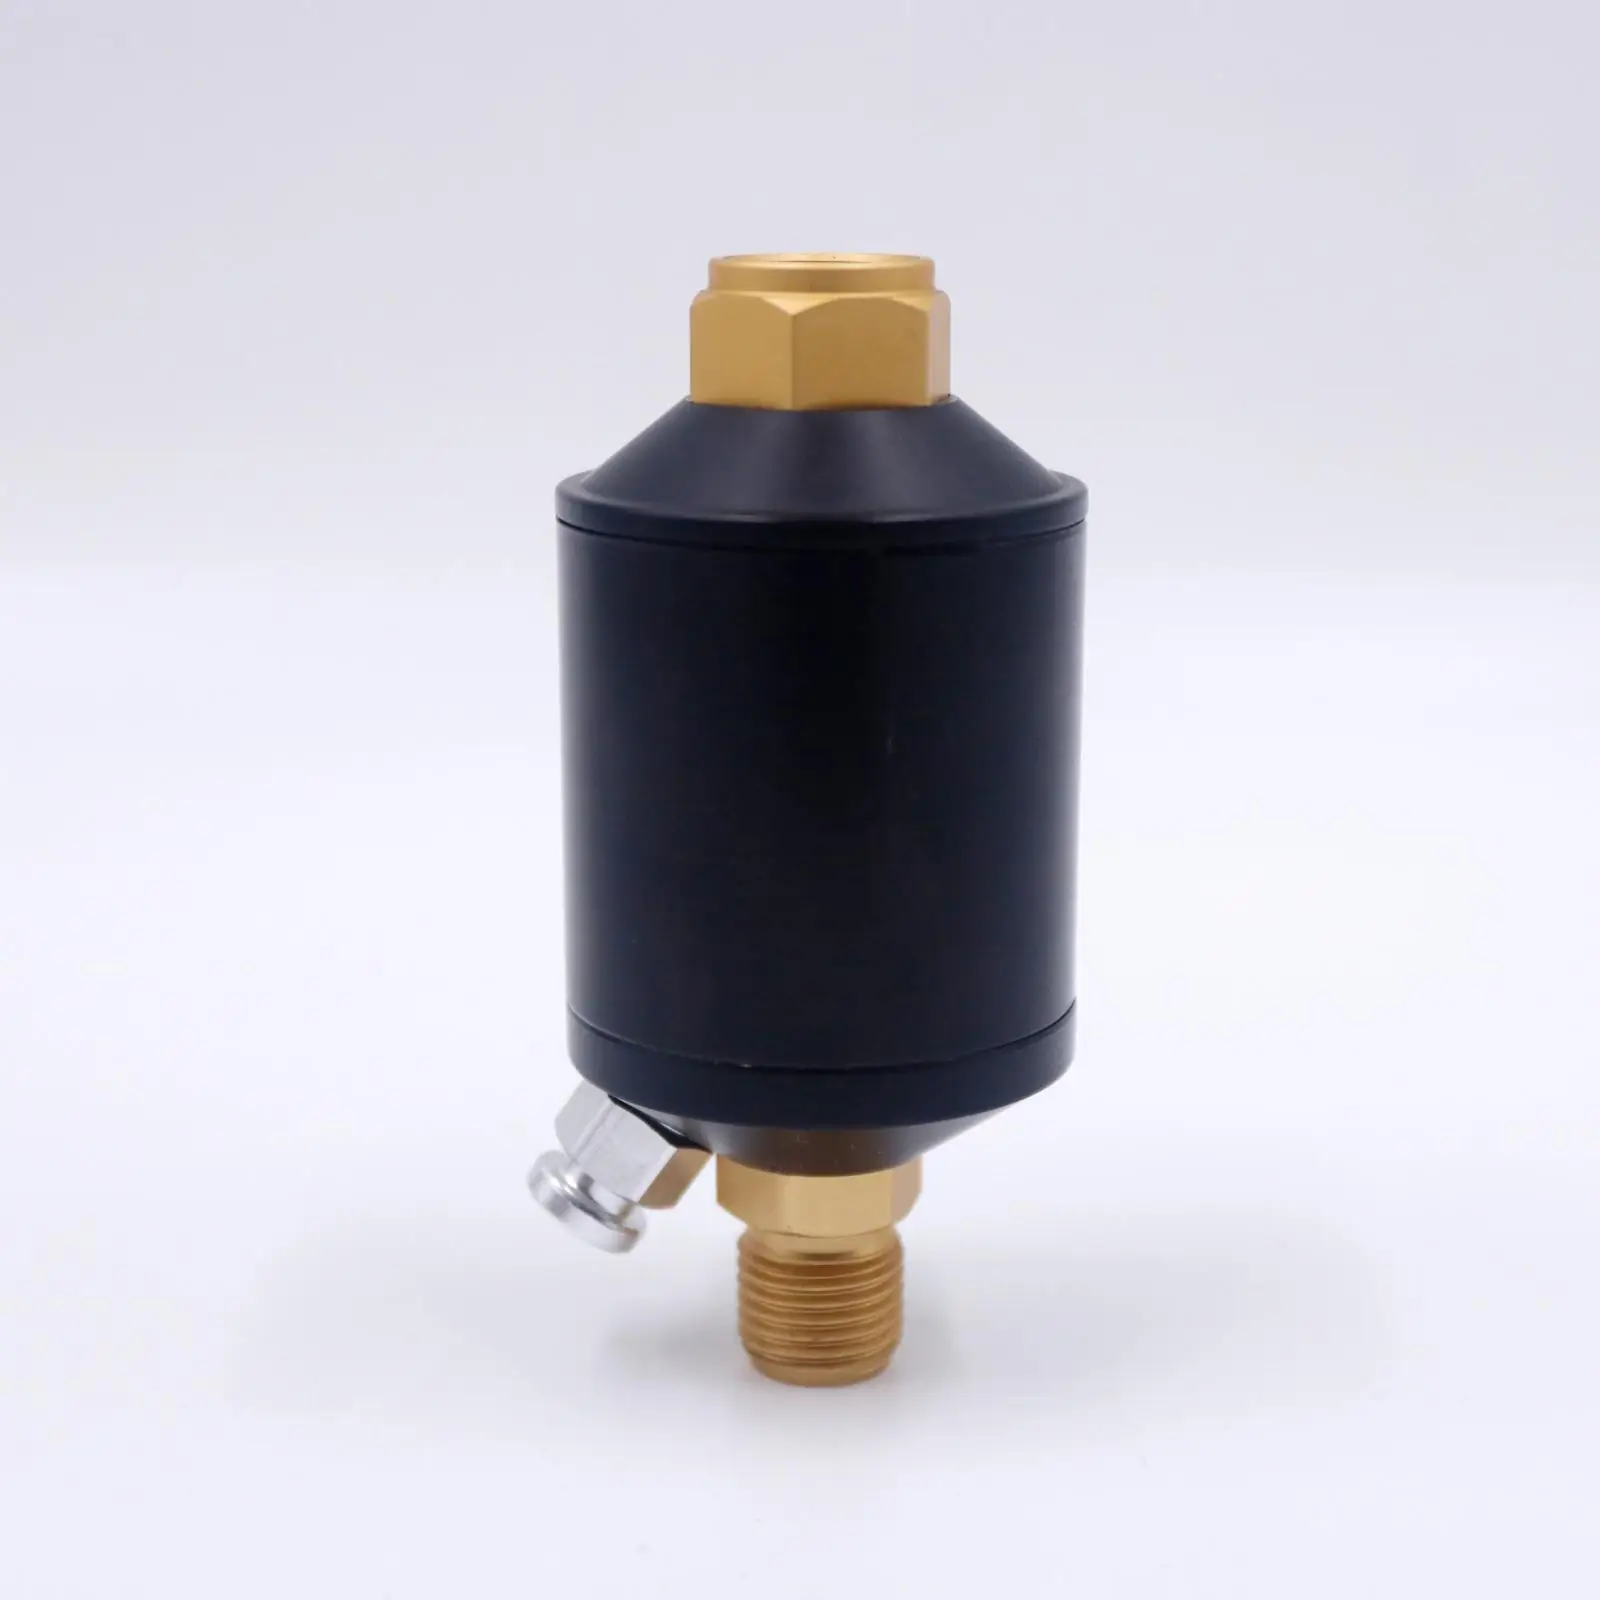 Adjustable Water Oil Separator Air Regulator Compressor Moisture with Pressure Gauge for Water Trap Filter Tools